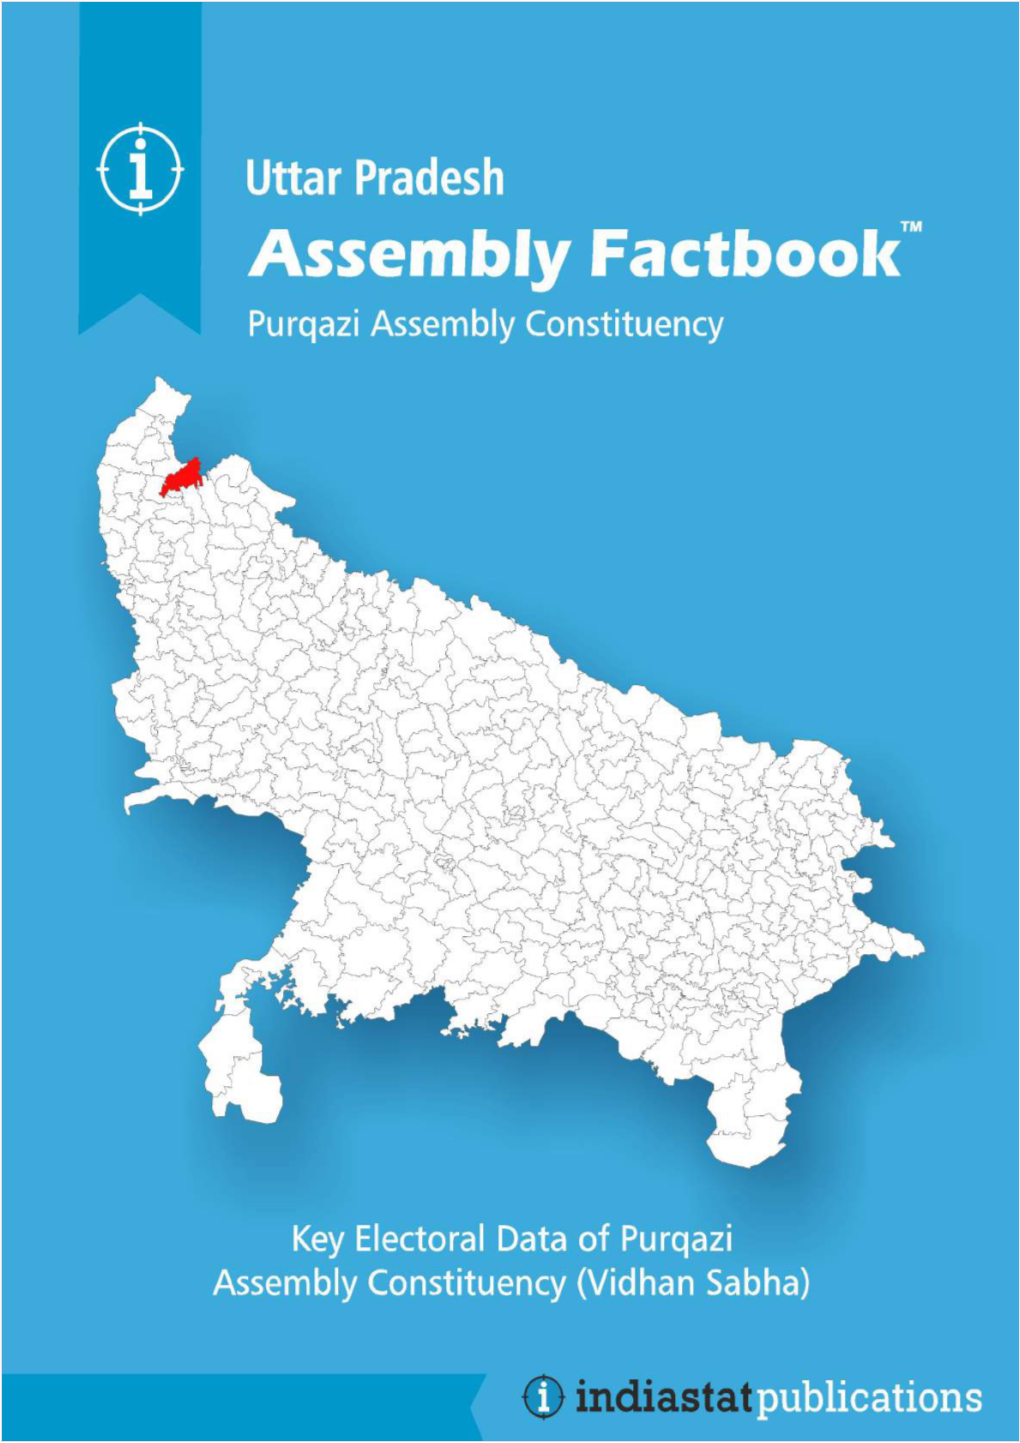 Purqazi Assembly Uttar Pradesh Factbook